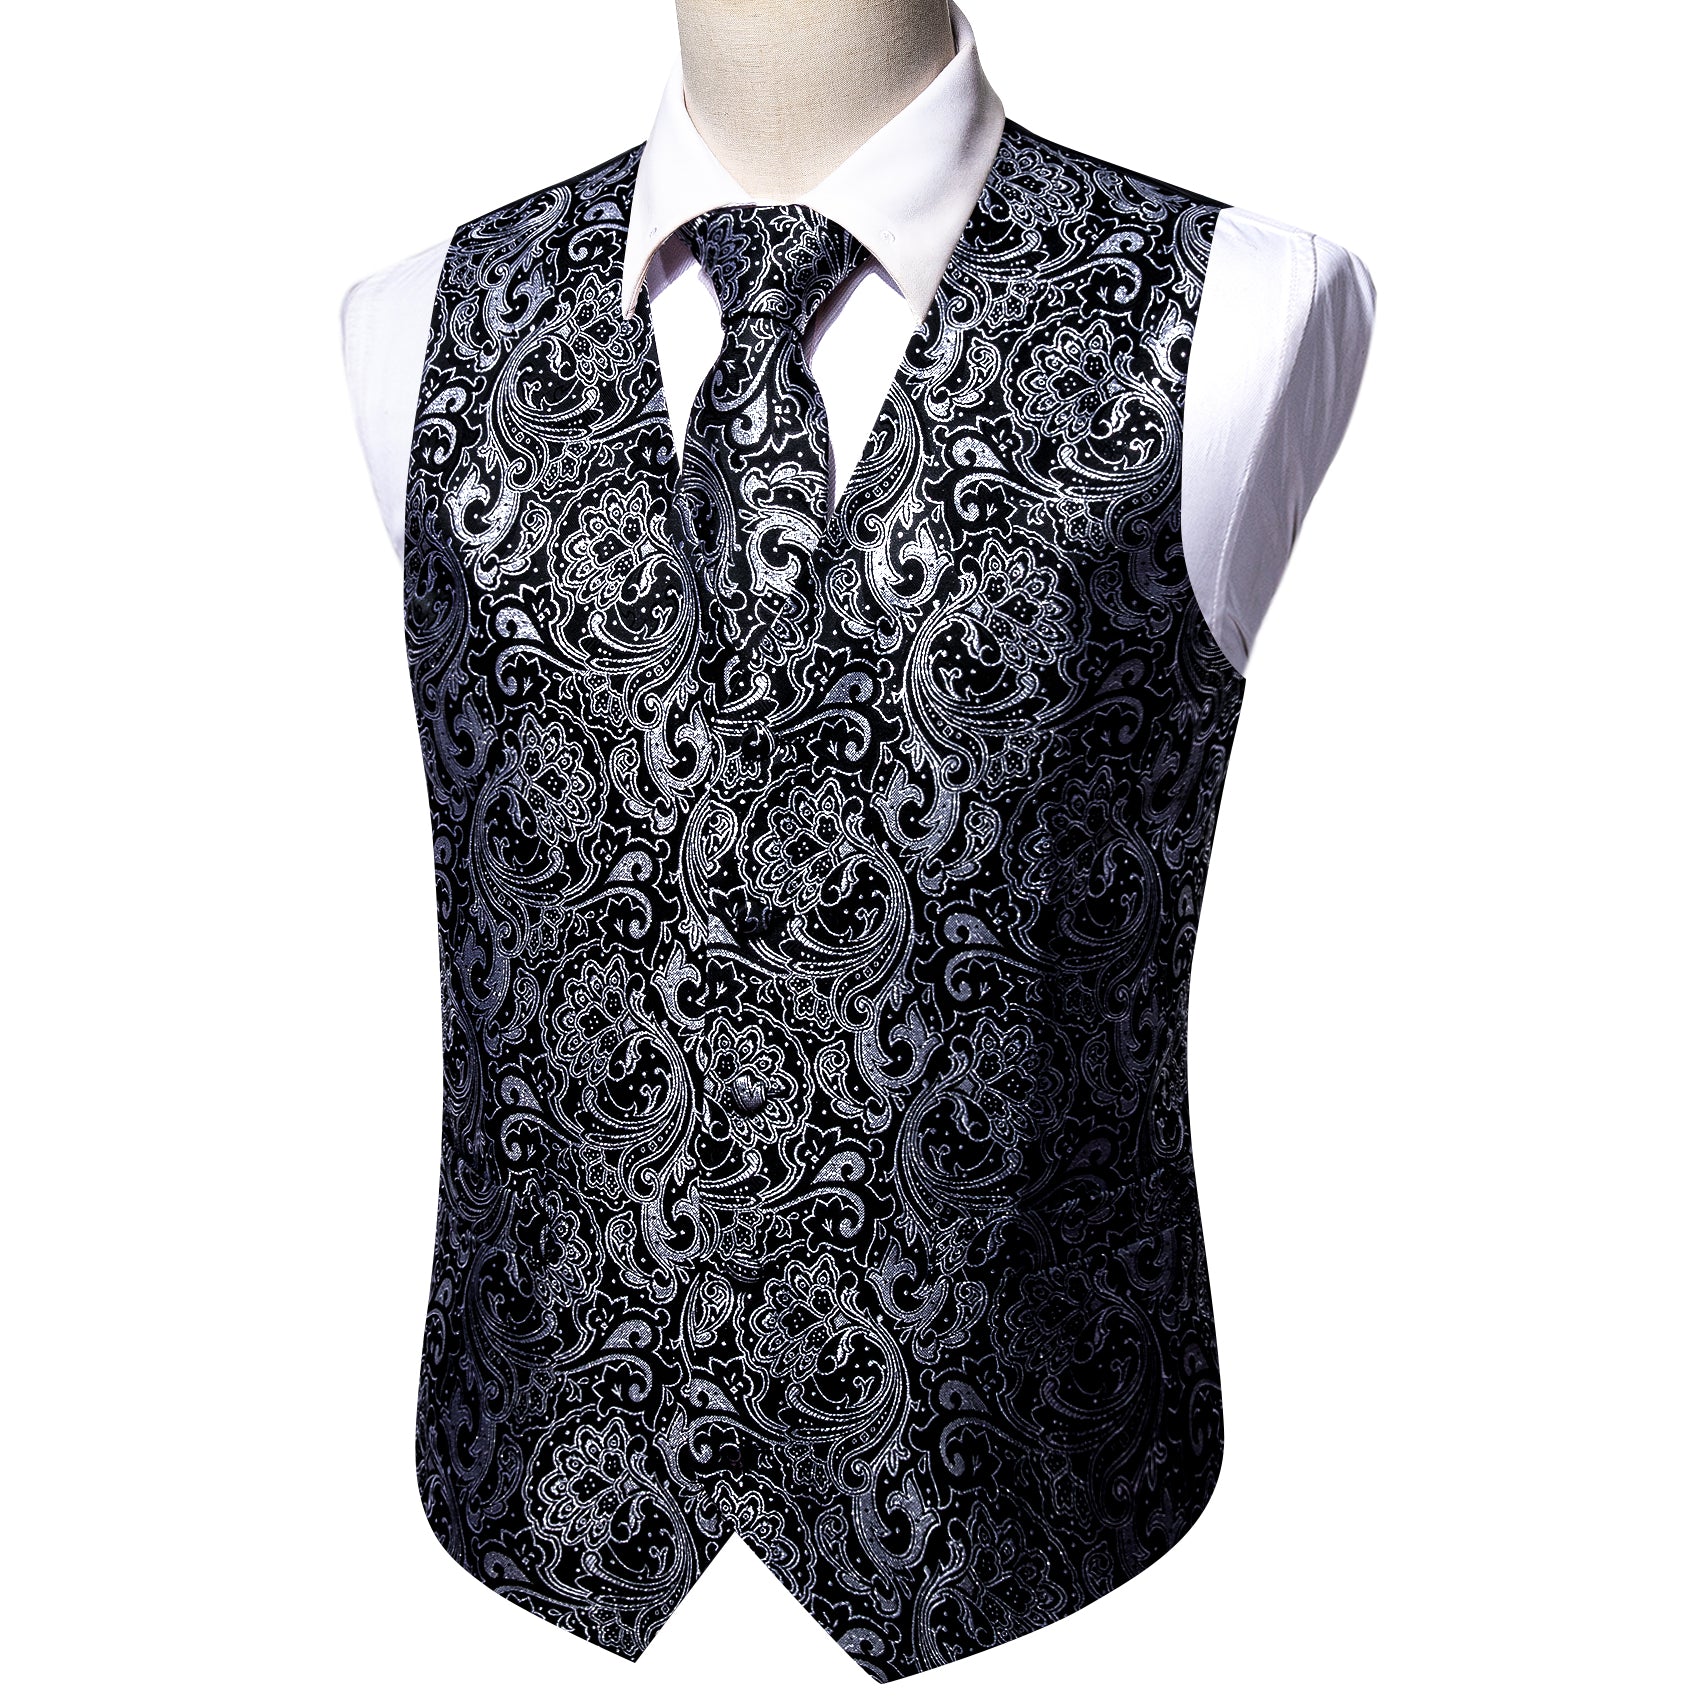 Classy Black White Paisley Silk Vest Necktie Pocket Square Cufflinks Set